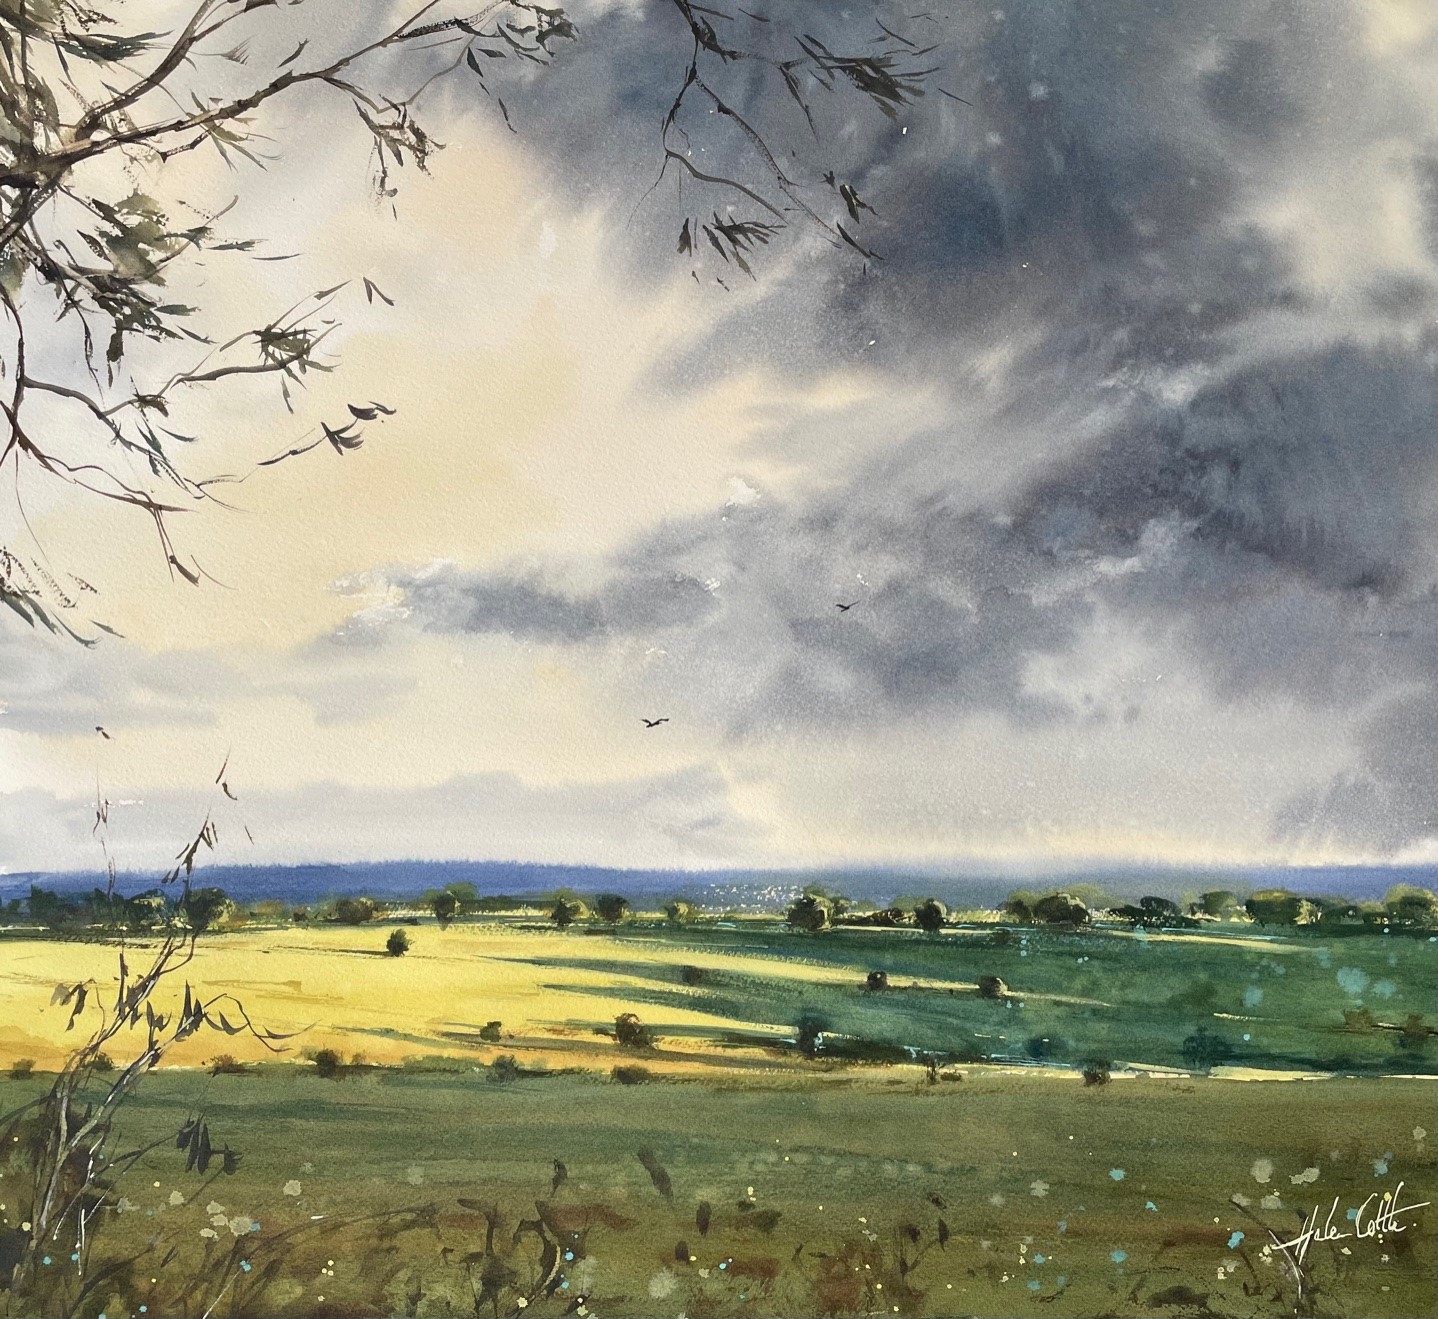 Atmospheric Autumn light, Macedon Ranges Victoria by Helen Cottle | Lethbridge 20000 2021 Finalists | Lethbridge Gallery